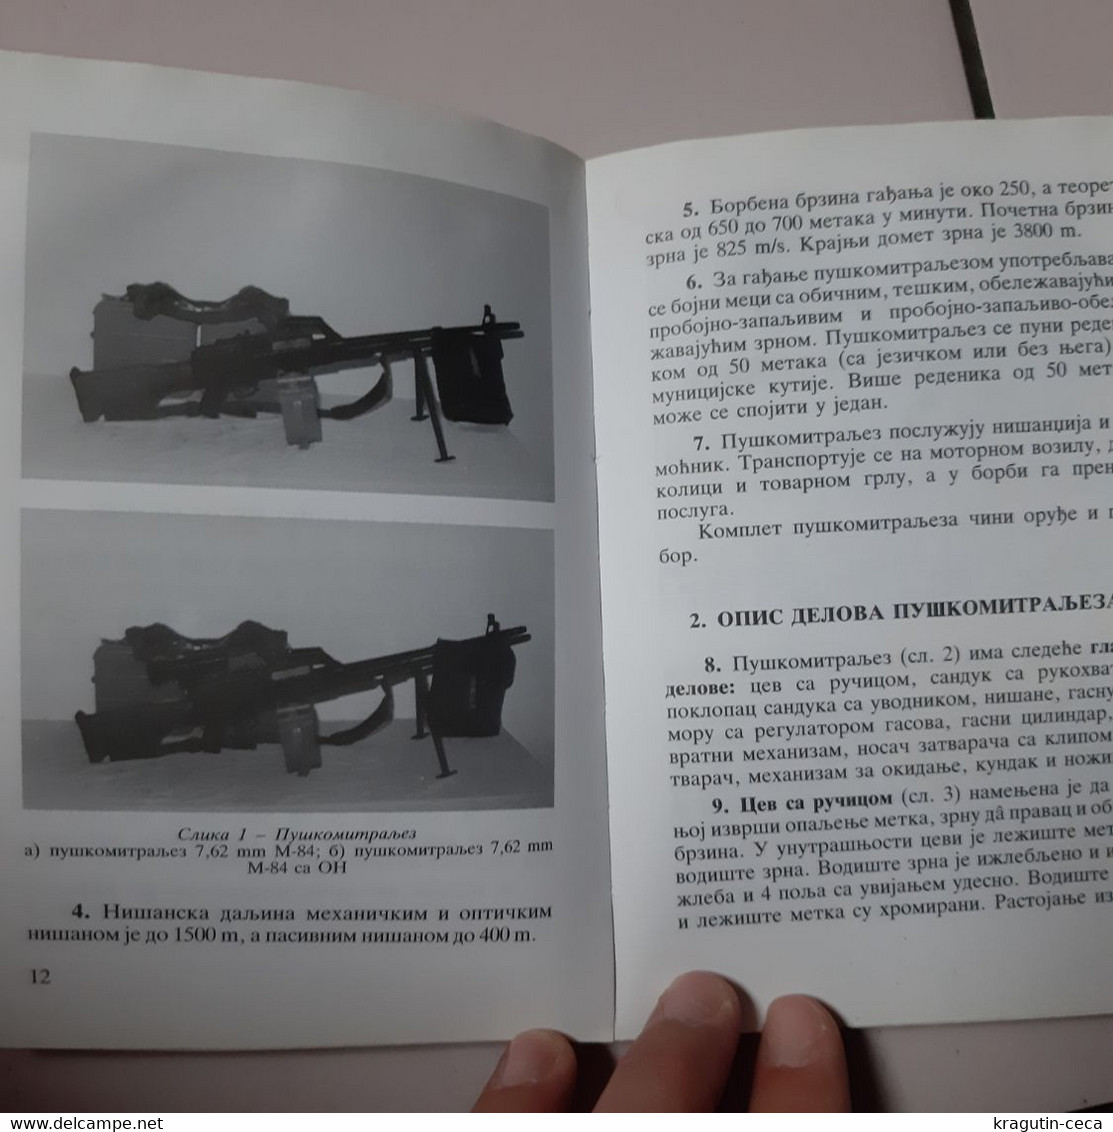 1998 SUB-MACHINE MACHINE GUN M-84 M84 7,62 mm SERBIA FORMER YUGOSLAVIA ARMY MANUAL BOOK USAGE BUCHE LIVRE ARMEE